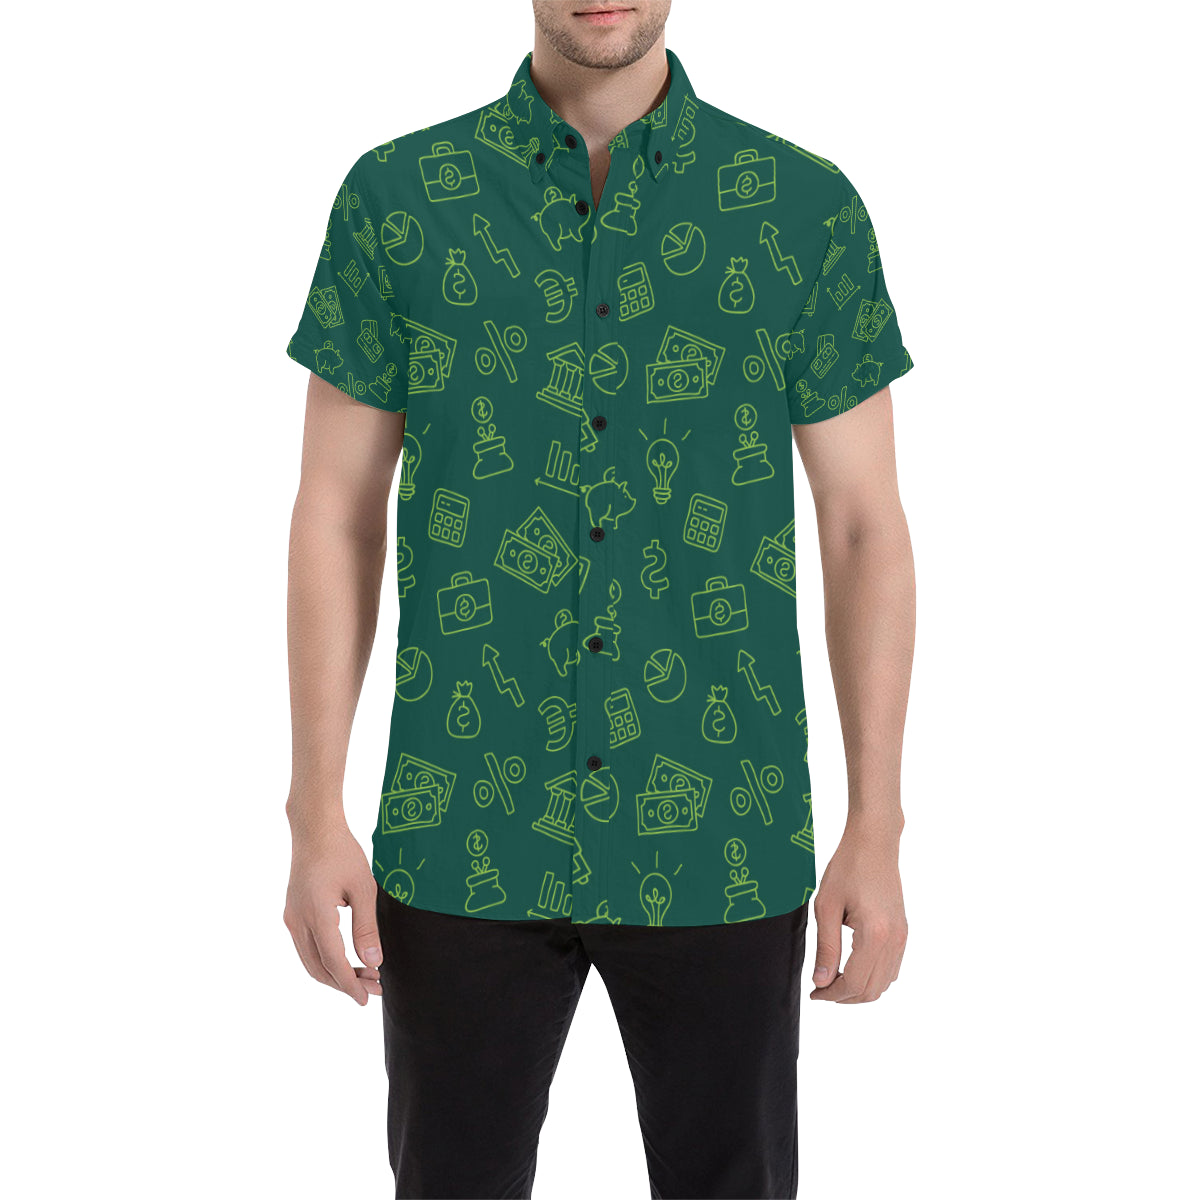 Accounting Financial Pattern Print Design 02 Men's Short Sleeve Button Up Shirt